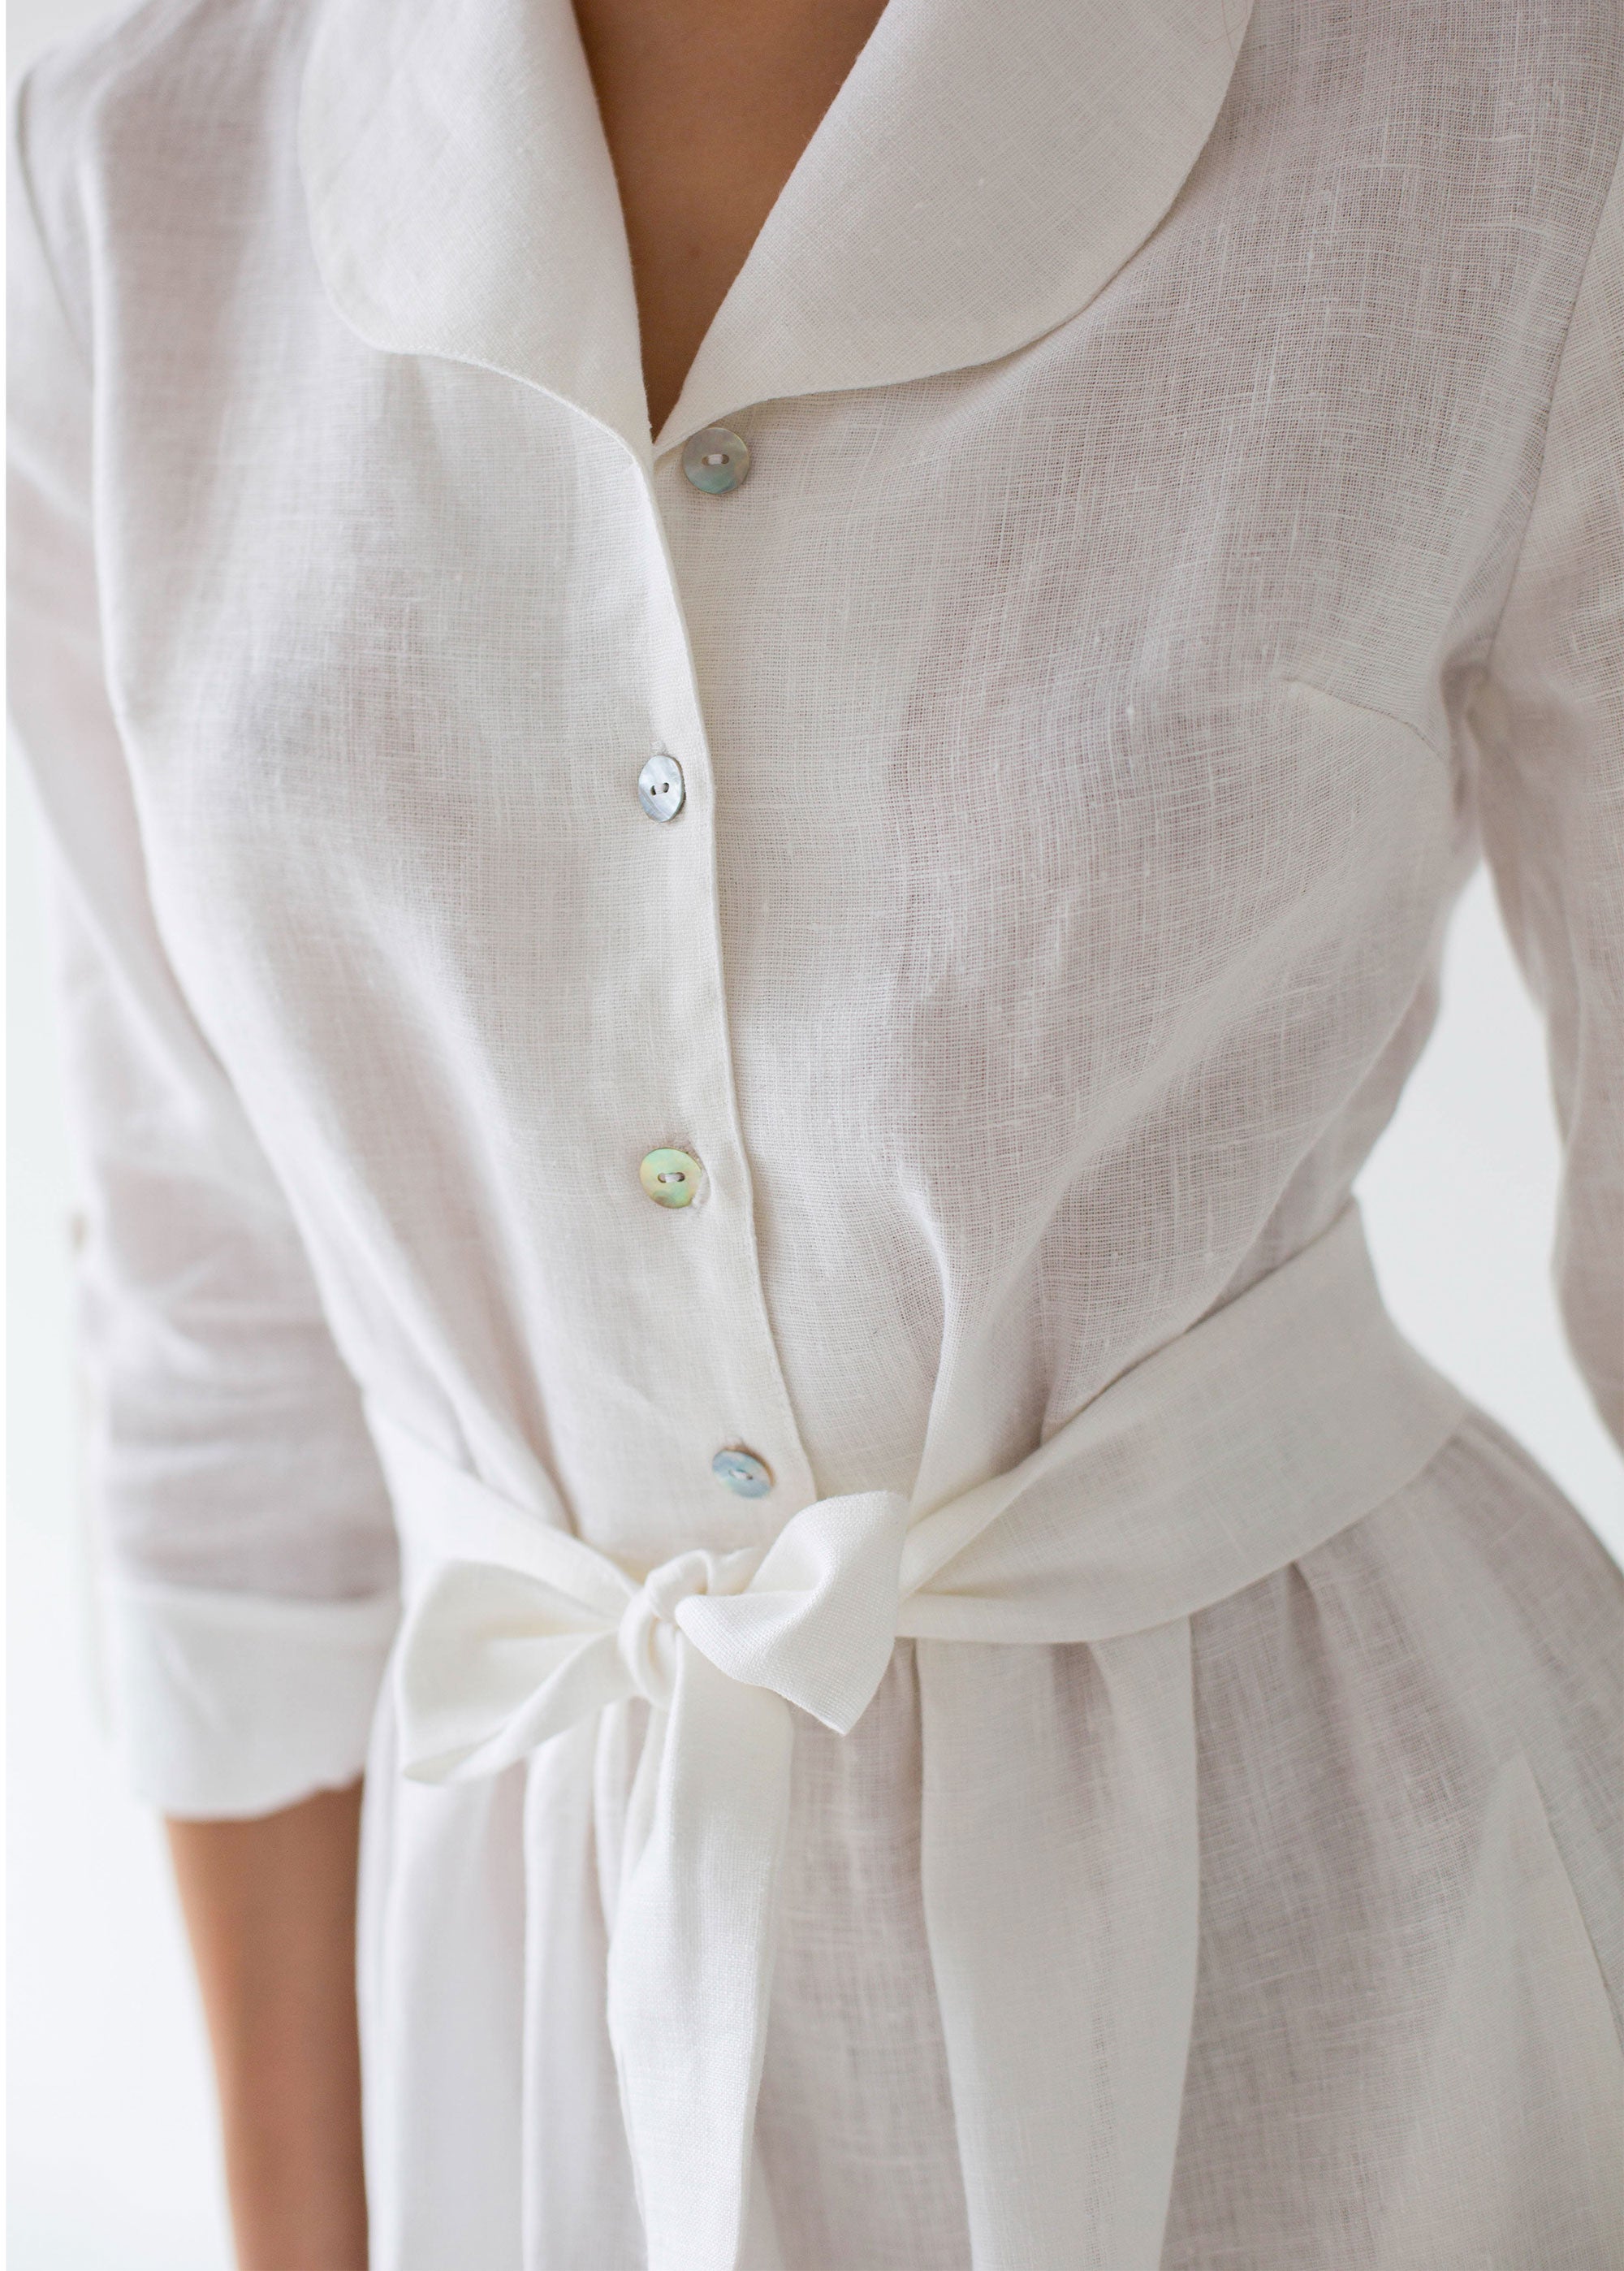 "Lily" White Linen Dress